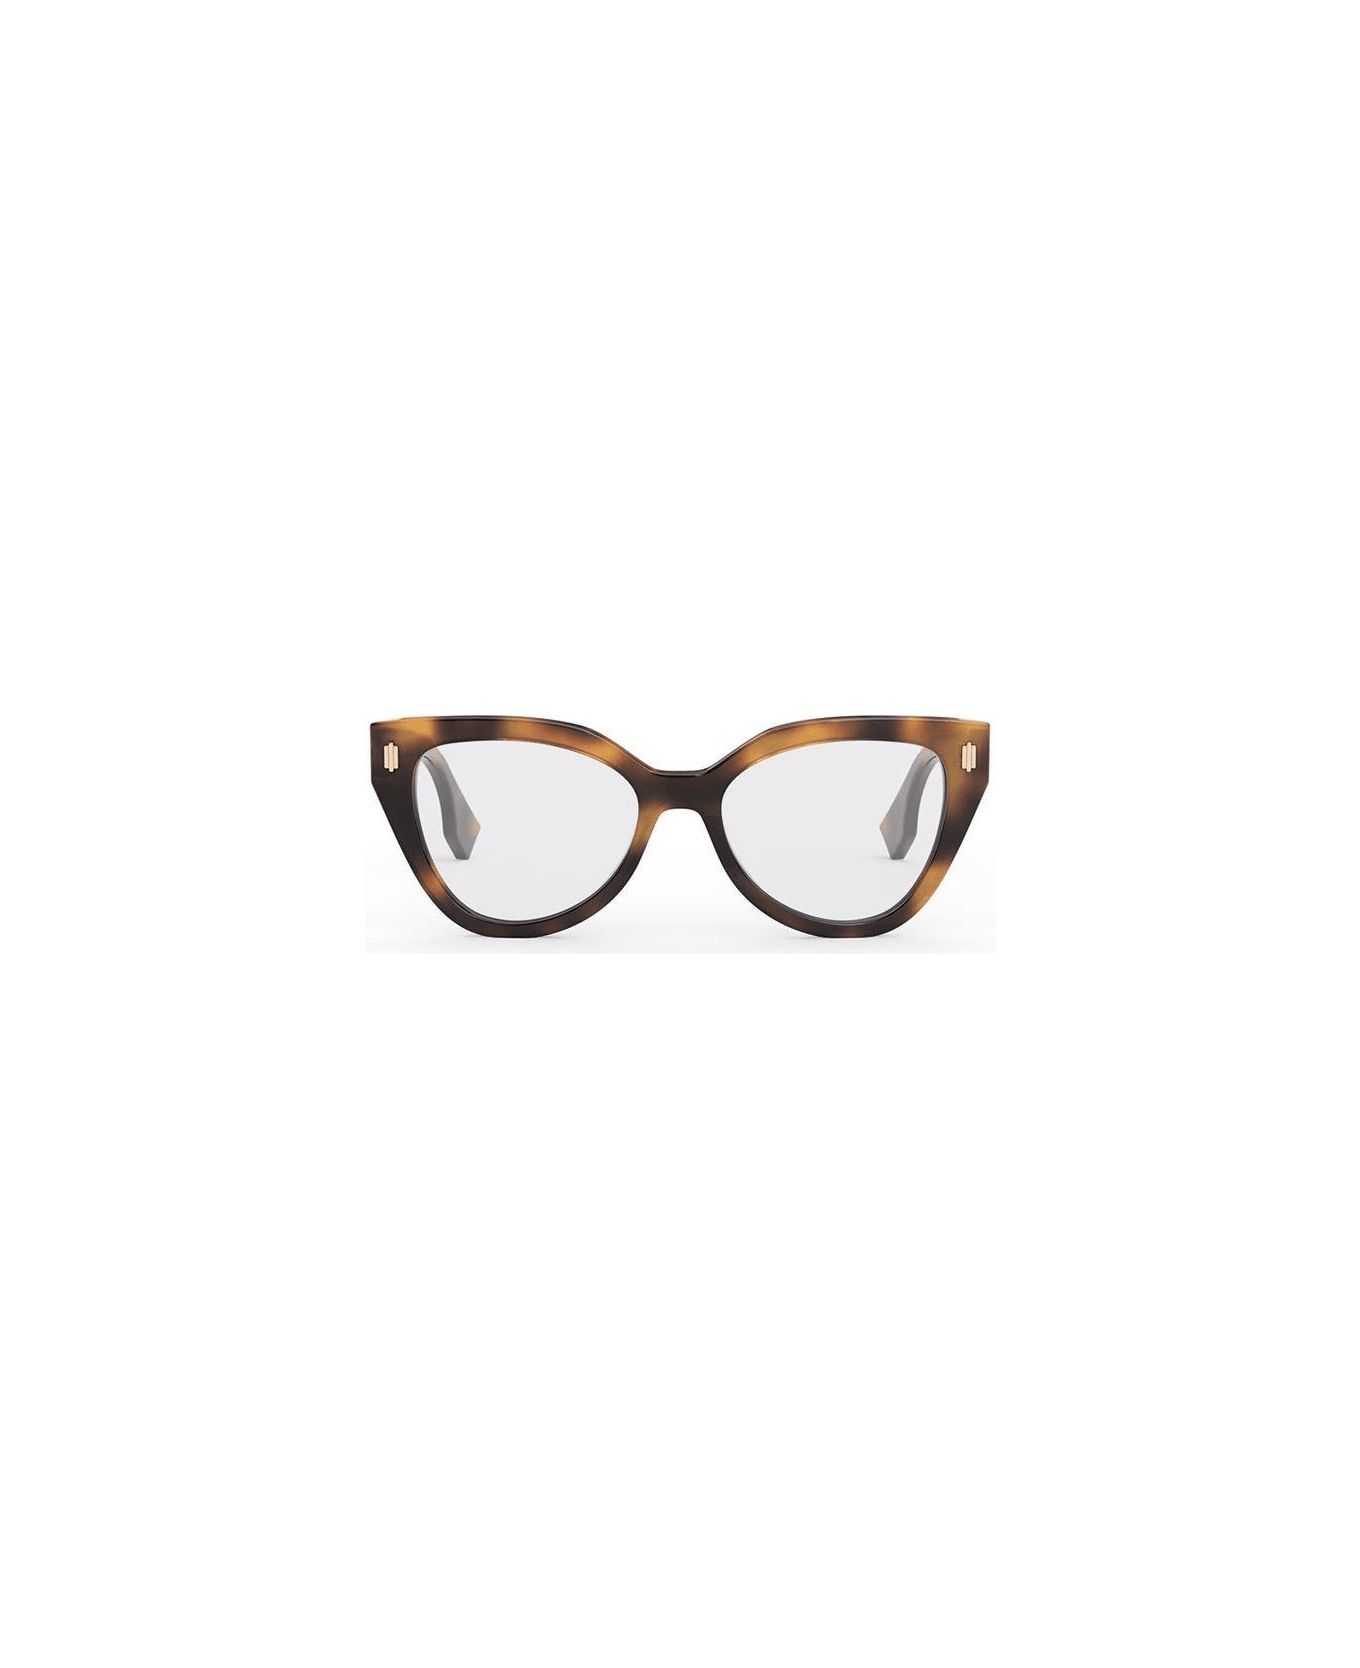 Fendi Eyewear Cat-eye Frame Glasses - 053